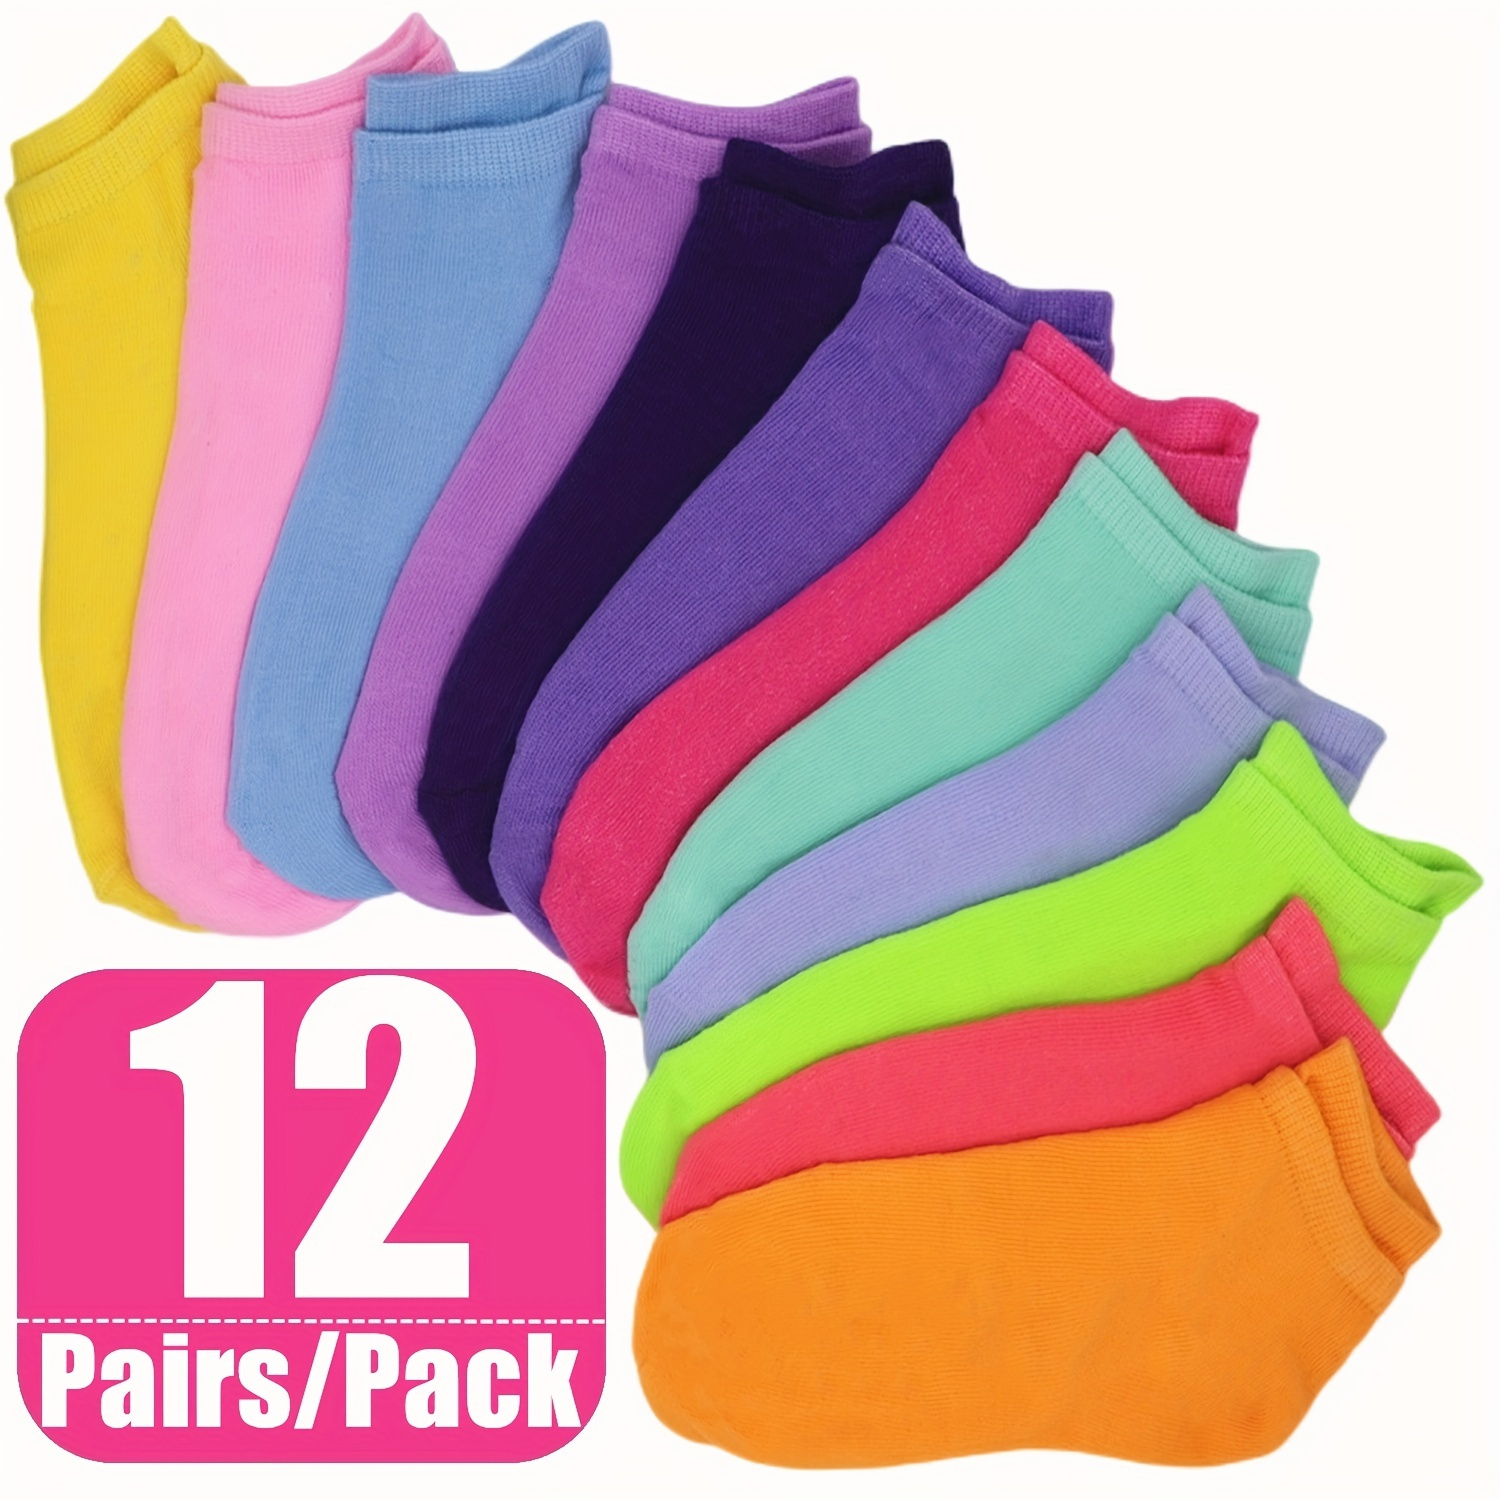 

12 Pairs Multi-color Ankle Socks, Soft & Lightweight Low Cut No Show Socks, Women's Stockings & Hosiery